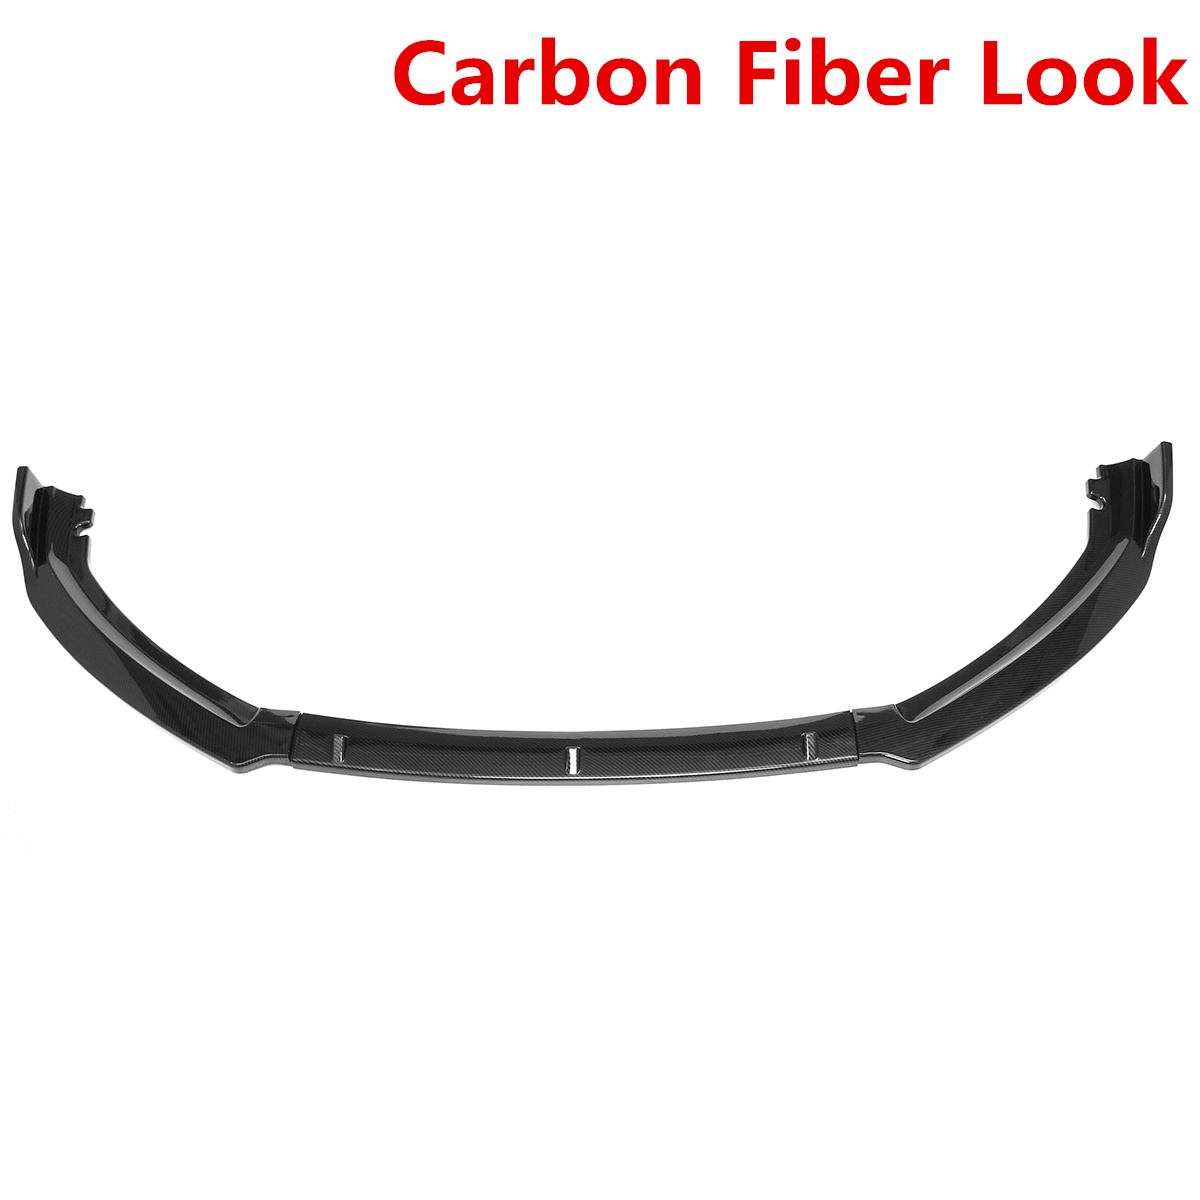 Car-Carbon-Fiber-Look-Front-Bumper-Lip-Body-Kit-Spoiler-For-Ford-Focus-2019-1685766